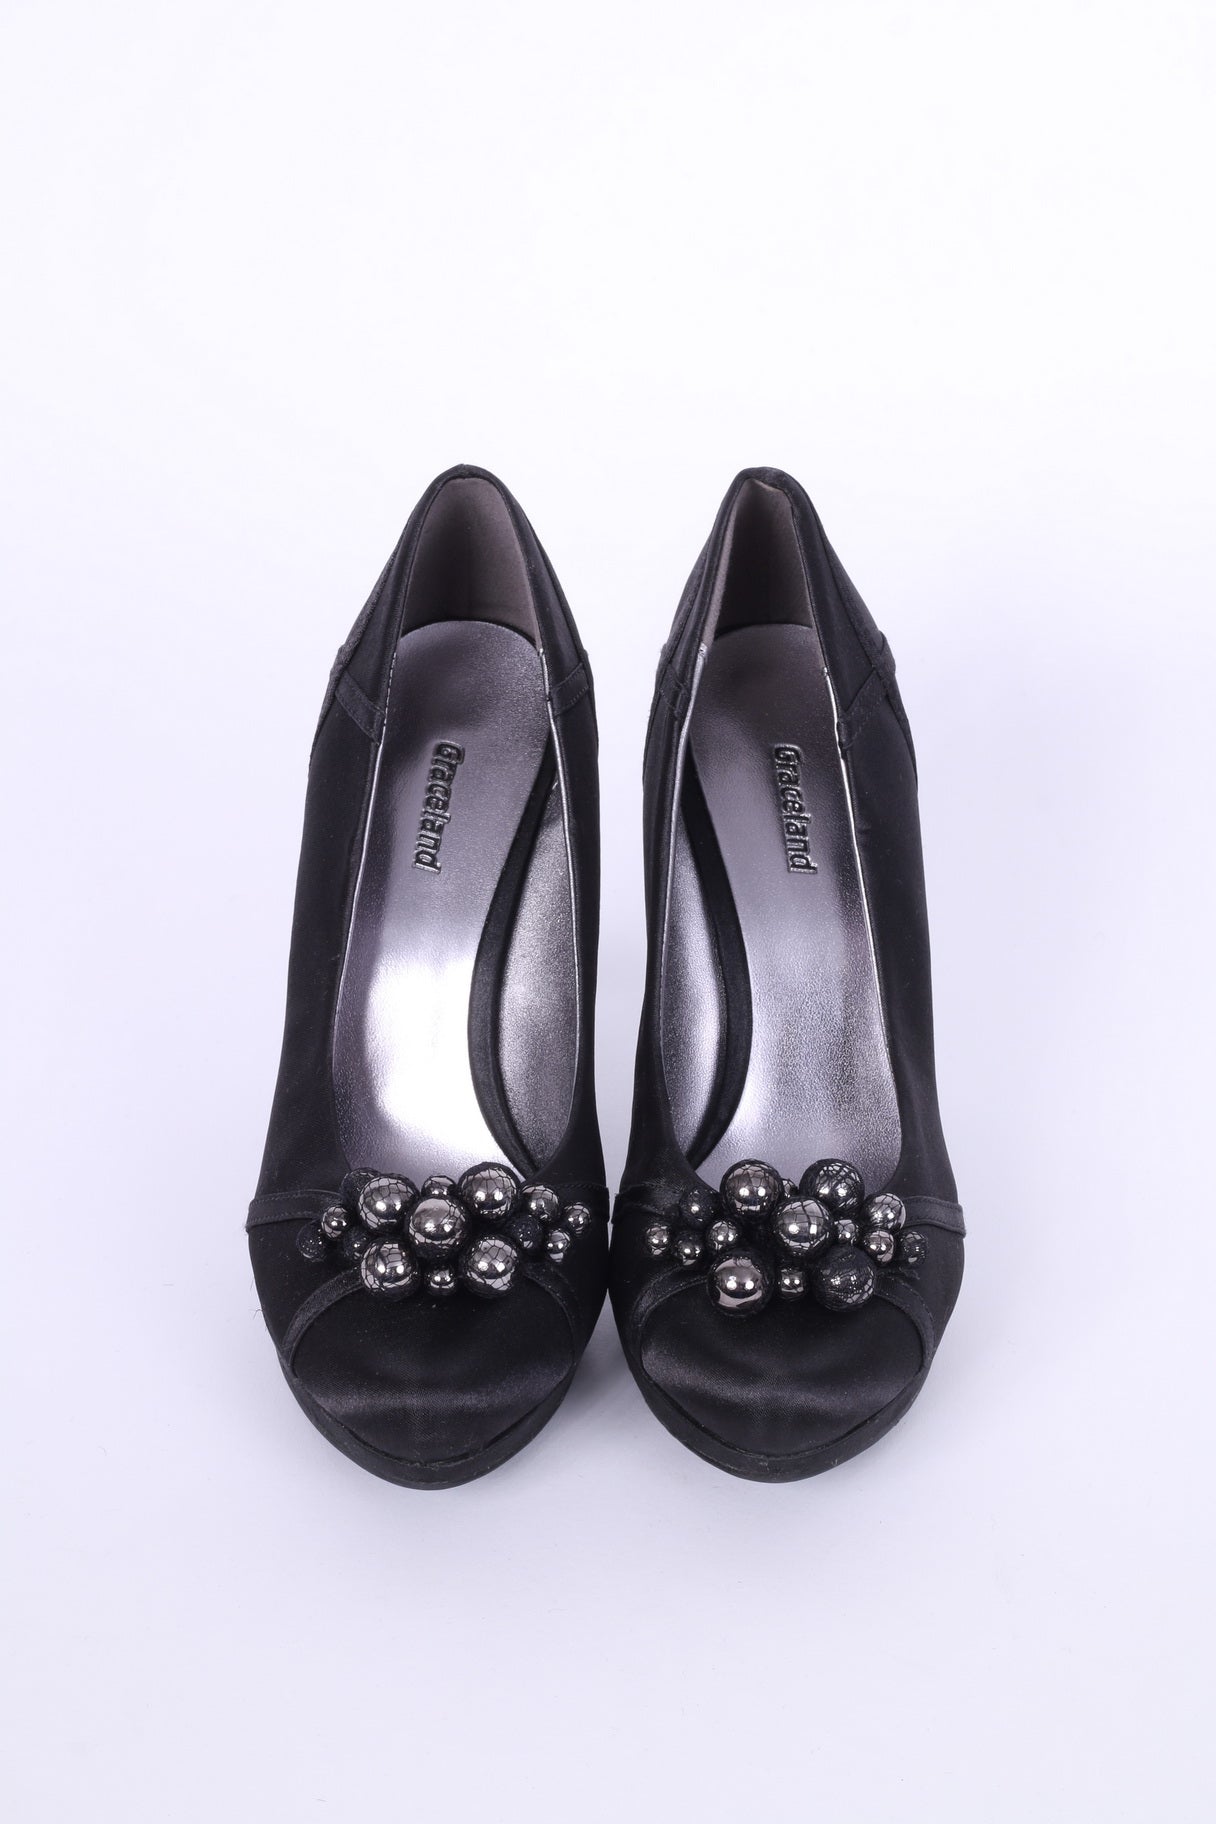 Numerisk Seaboard Grine Graceland Womens EU 37 Shoes Black Heels Detailed – RetrospectClothes